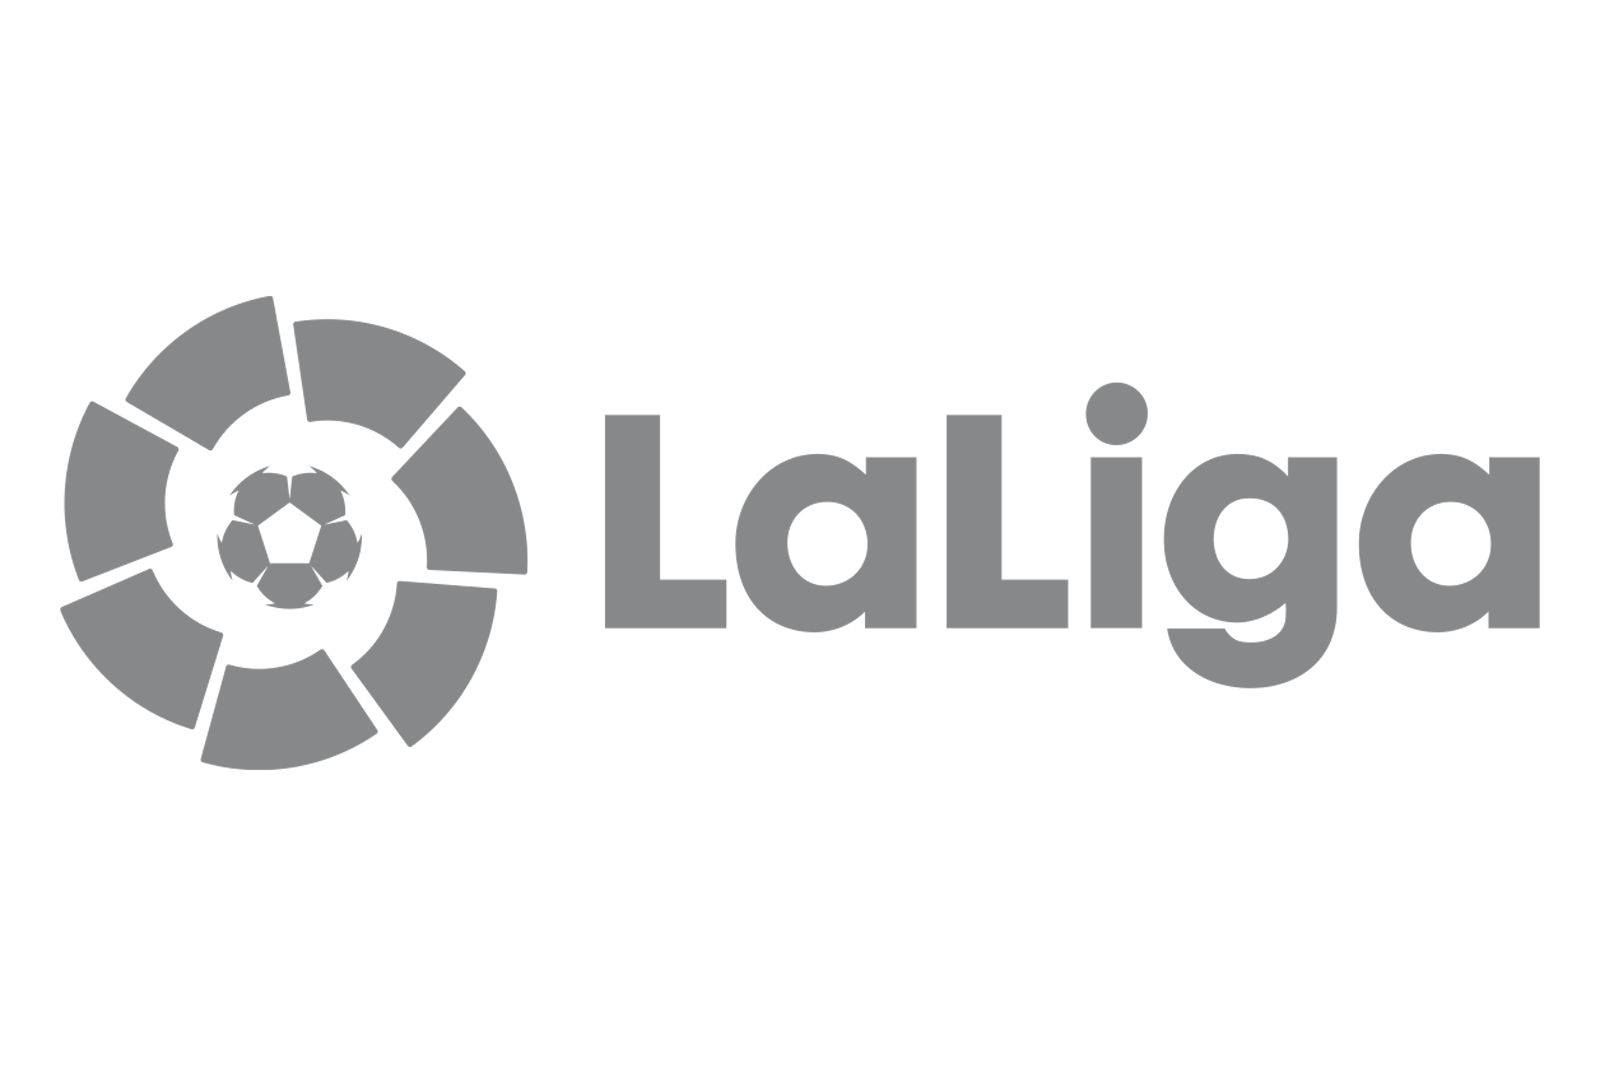 melonkicks-clients-logos-la-liga.png